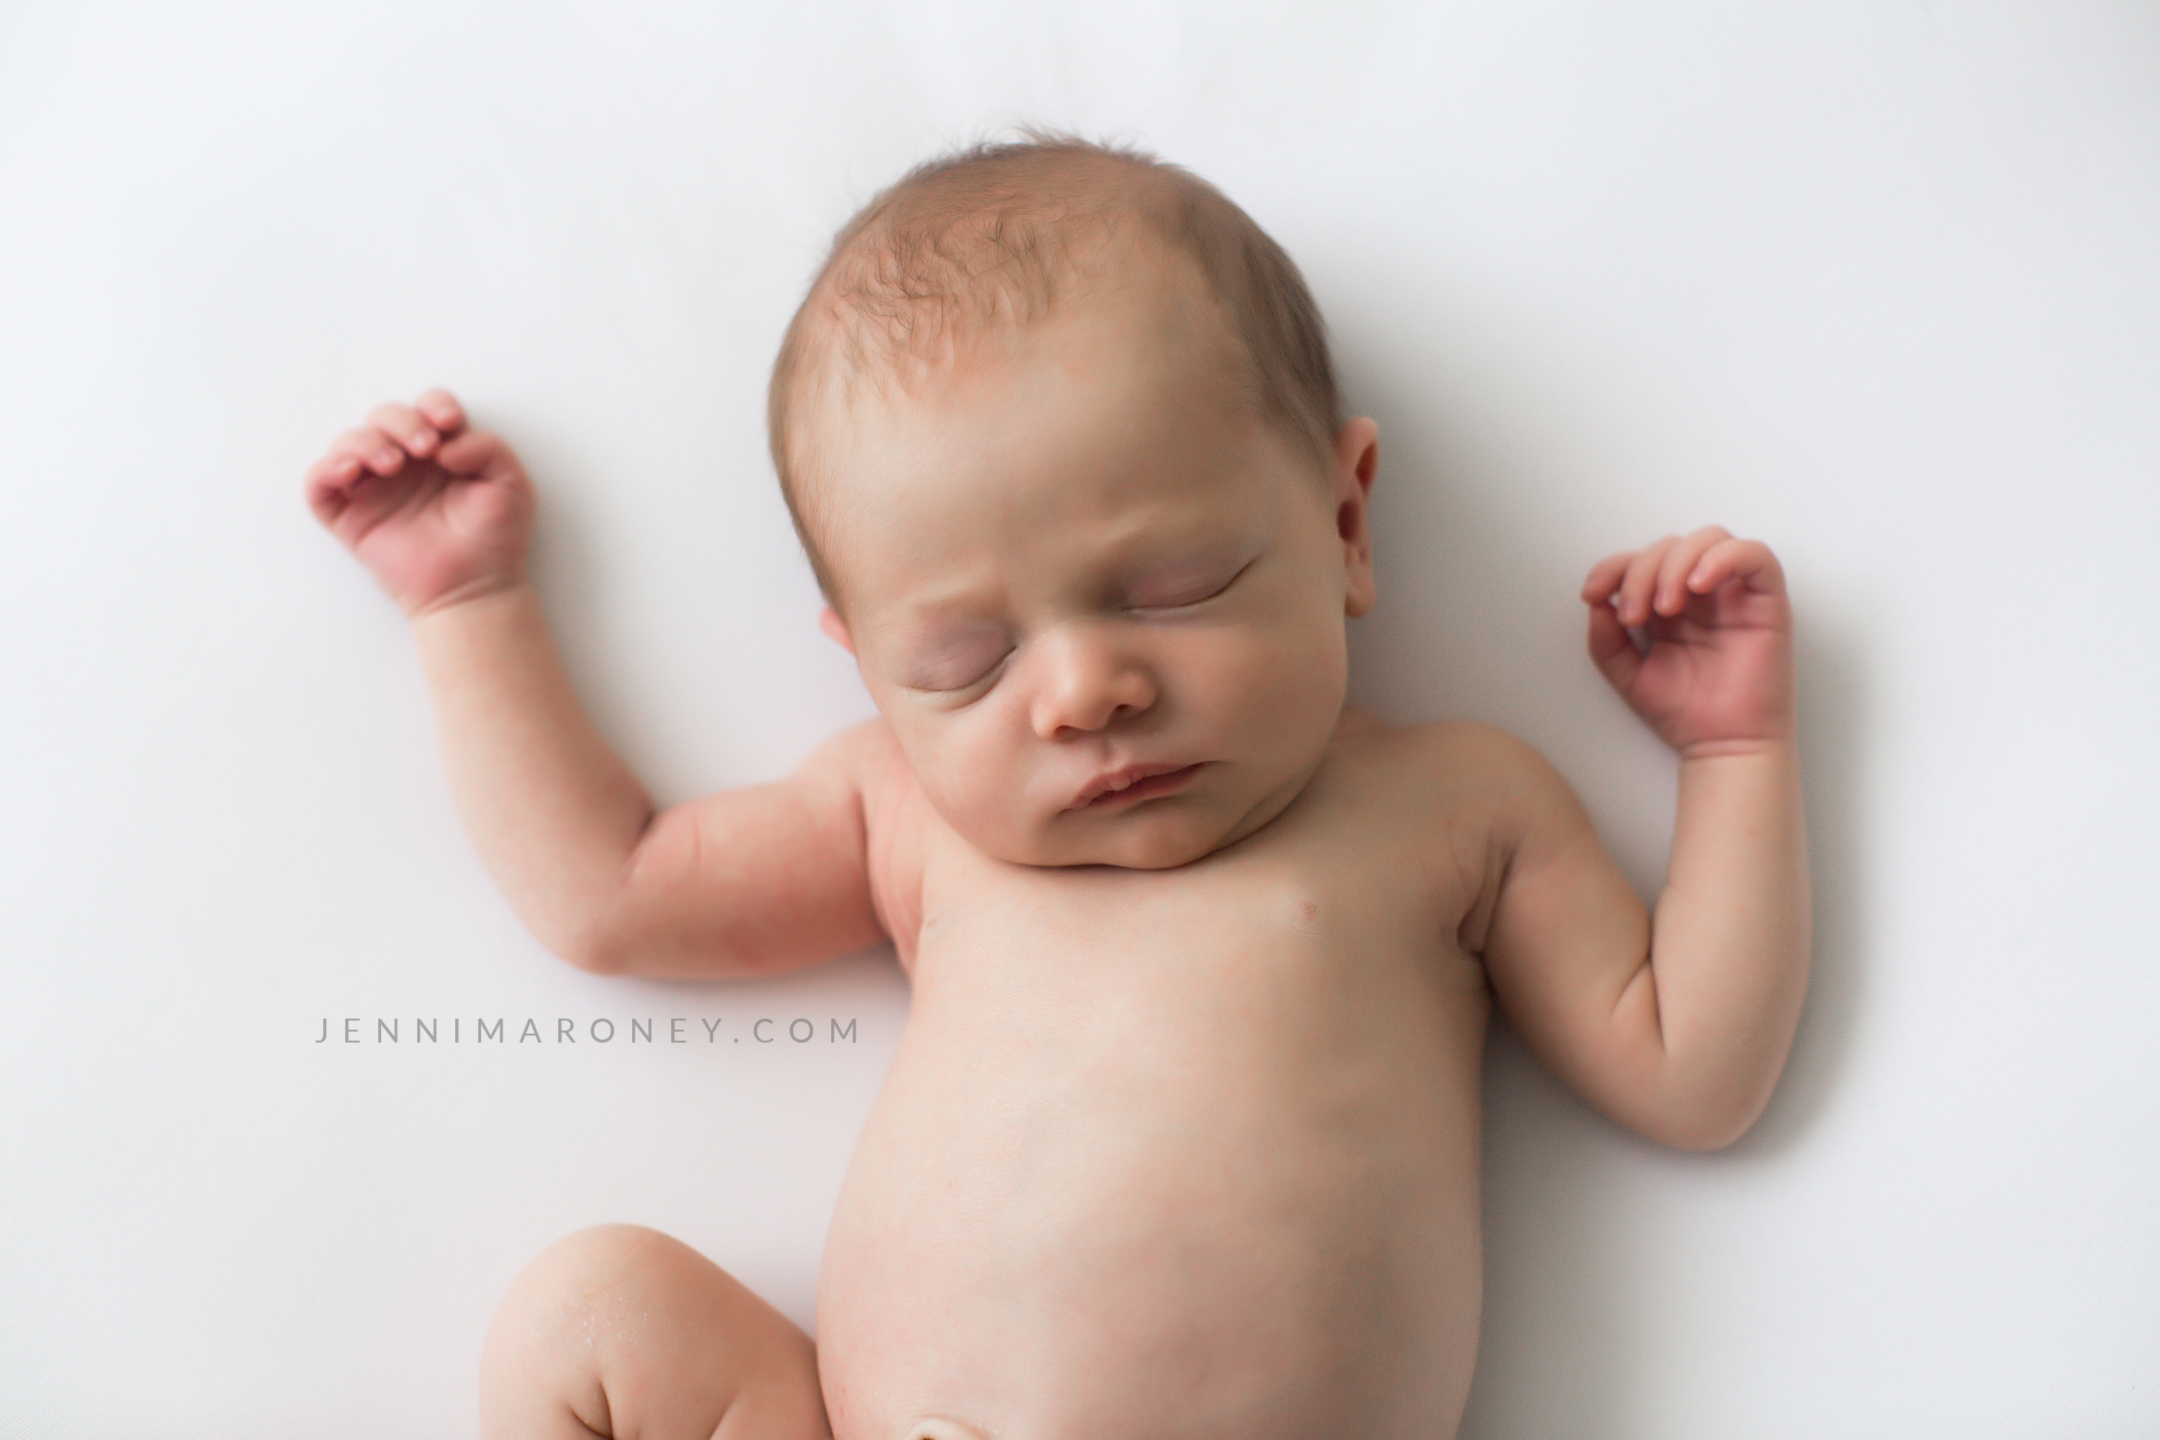 Boulder newborn photographers and Denver newborn photographer, Jenni Maroney shares 5 tips to hiring a newborn photographer.